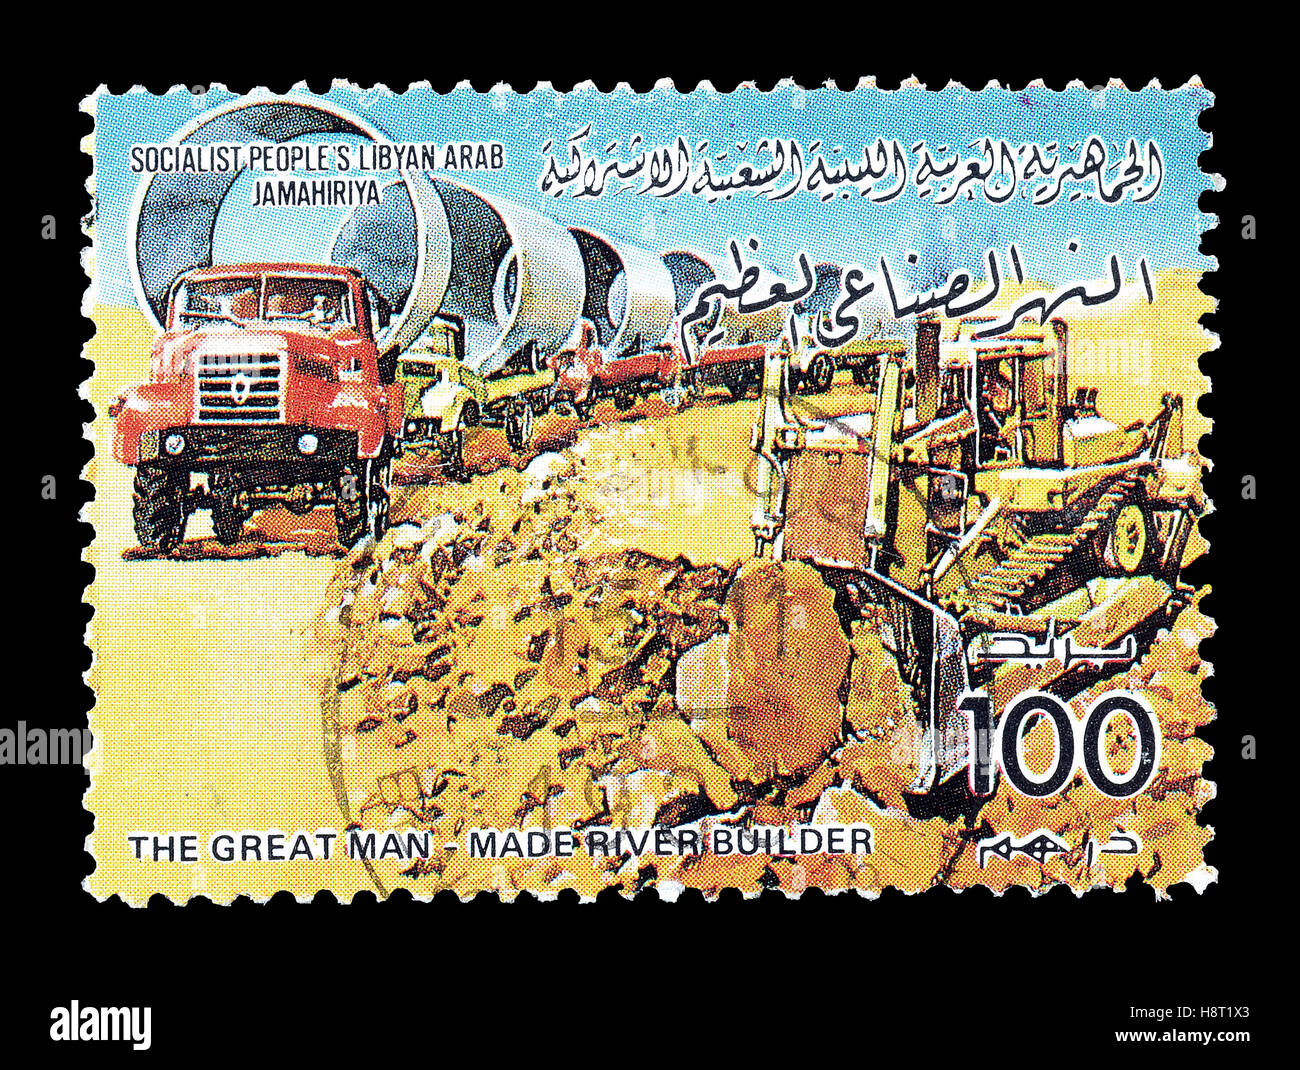 Libya stamp 1986 Stock Photo